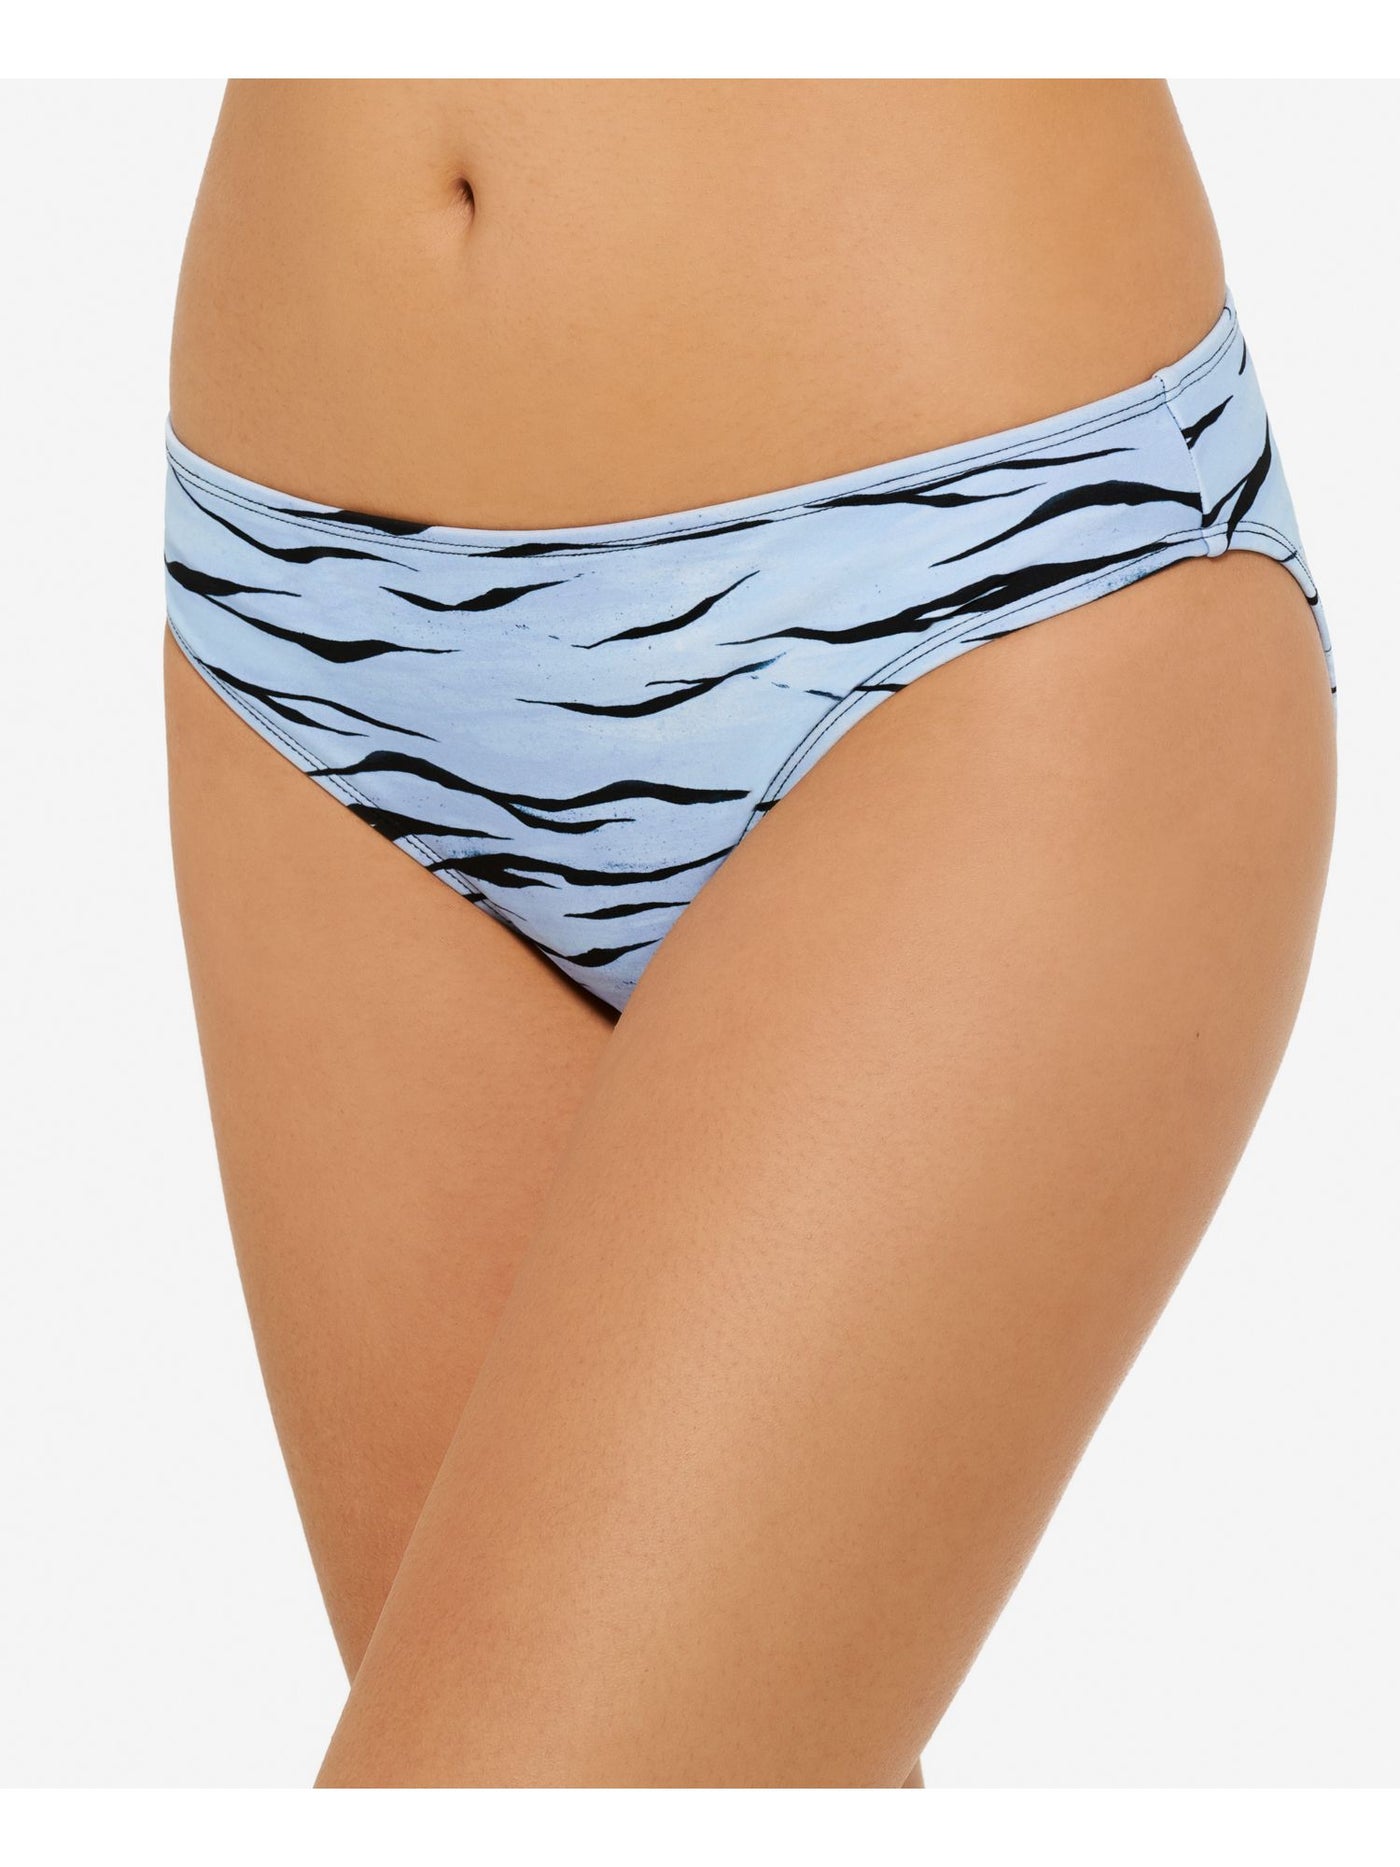 HULA HONEY Women's Light Blue Animal Print Lined Wild Cat Hipster Swimsuit Bottom L